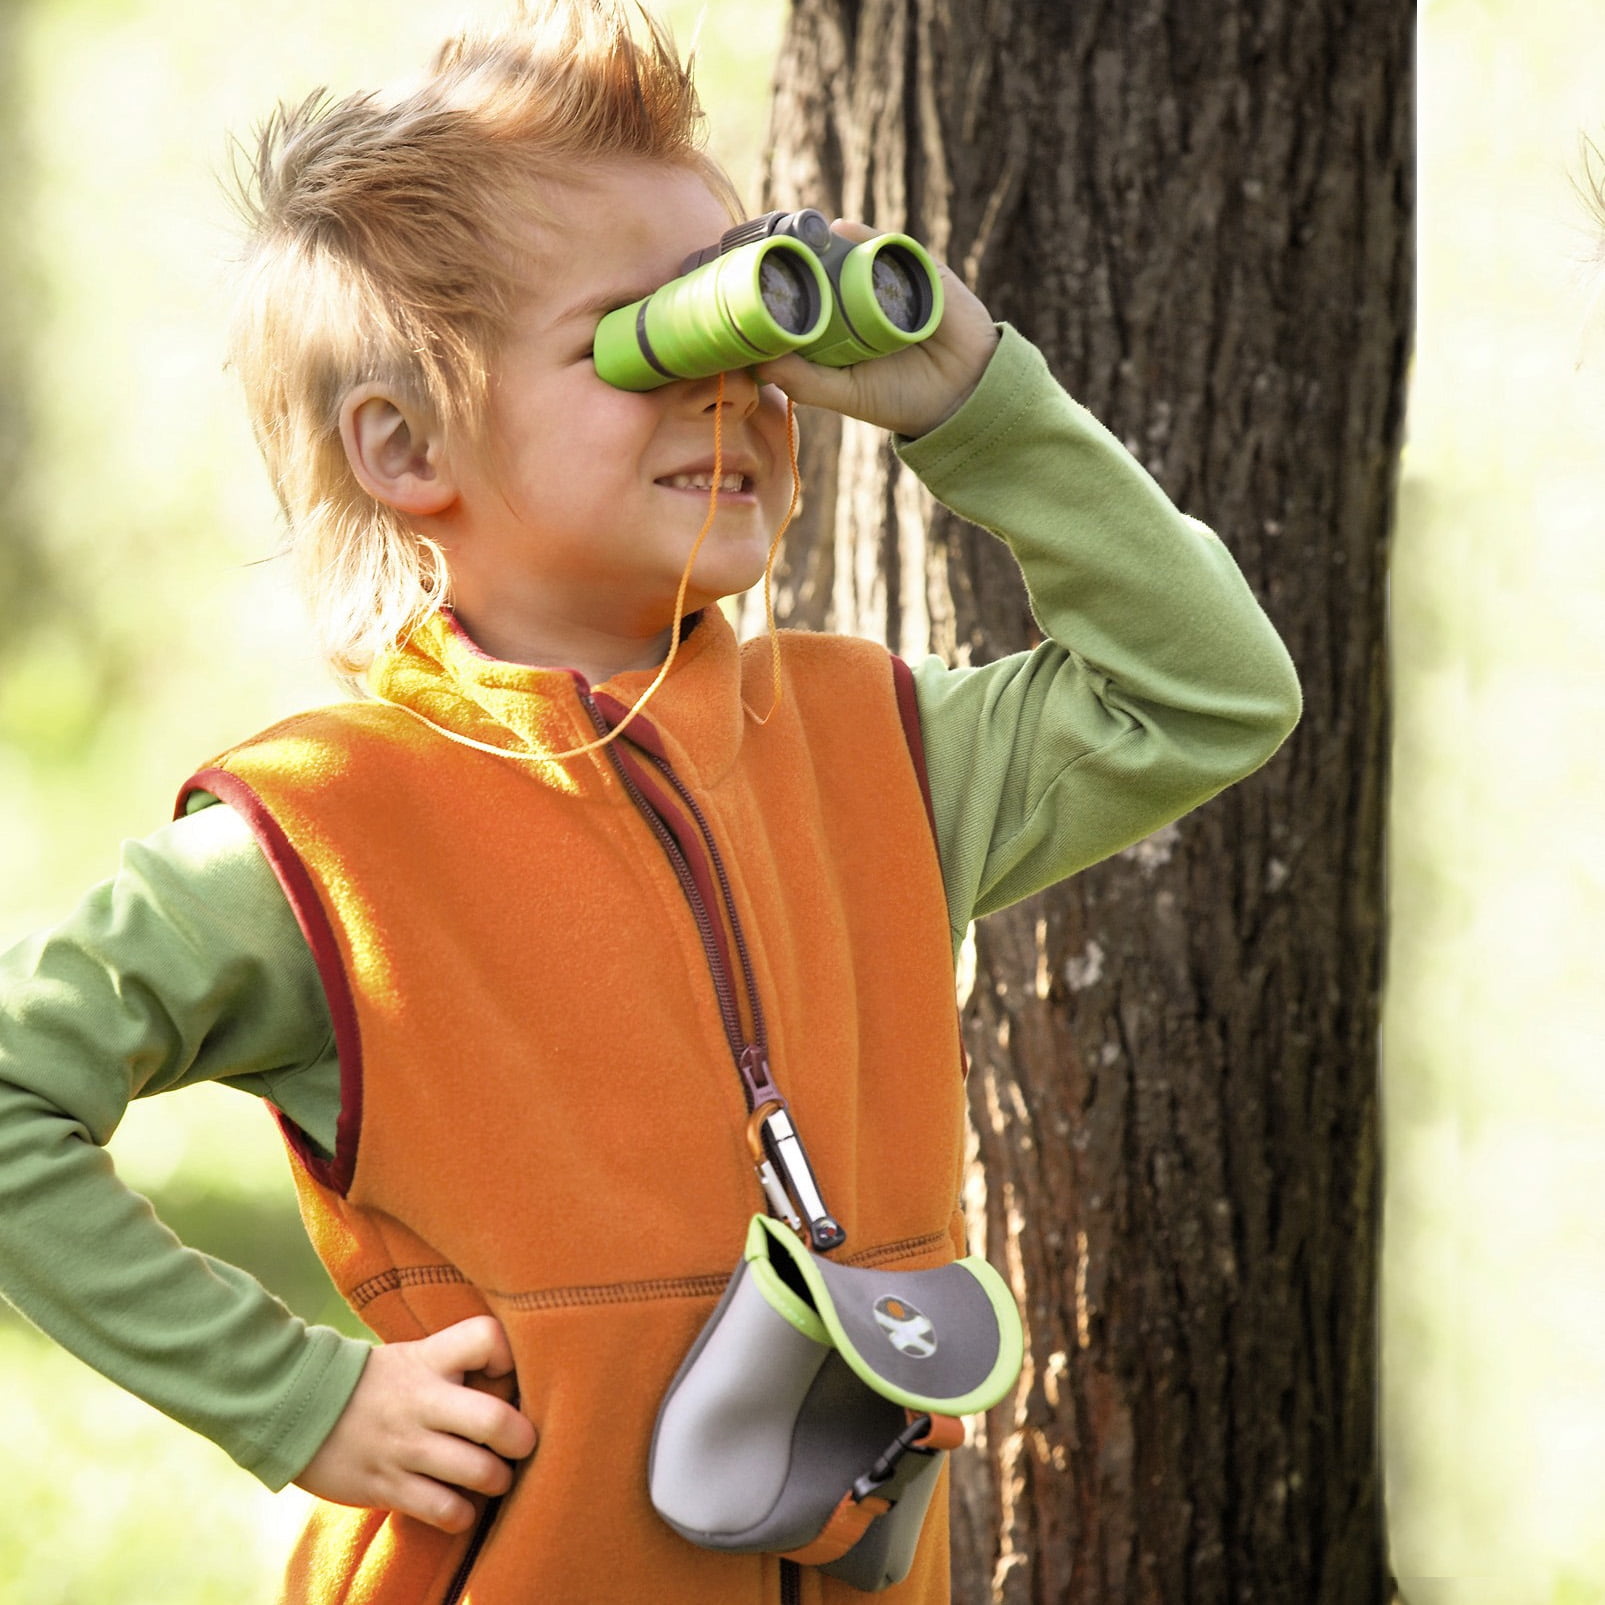 4x30 Magnification with Compact Case HABA Terra Kids Binoculars